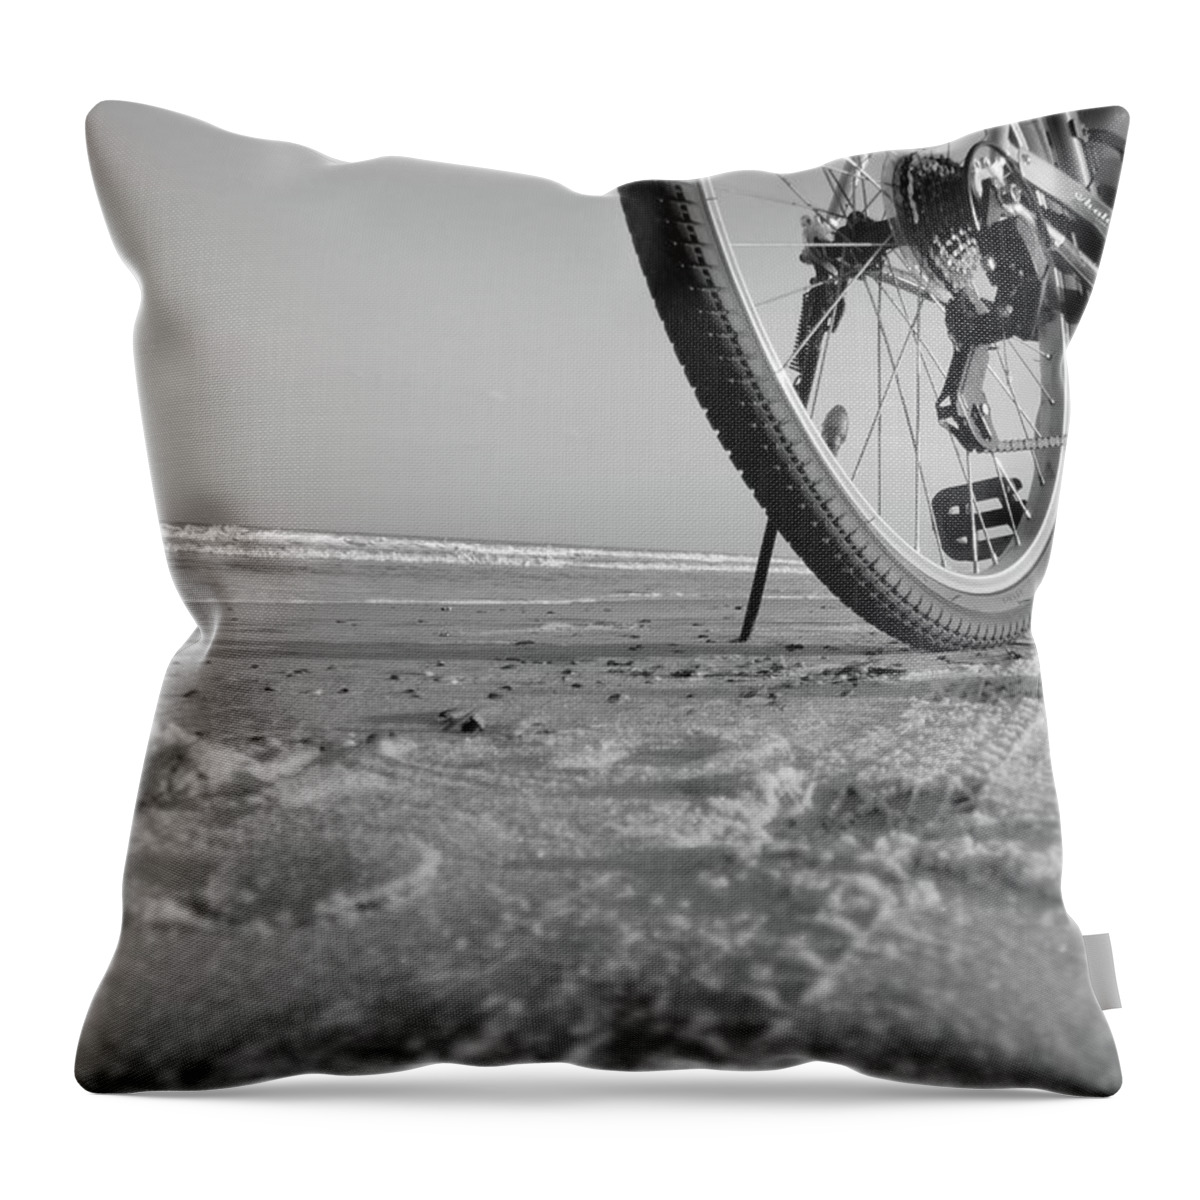 Black And White Print Throw Pillow featuring the photograph Biking To The Beach by WaLdEmAr BoRrErO